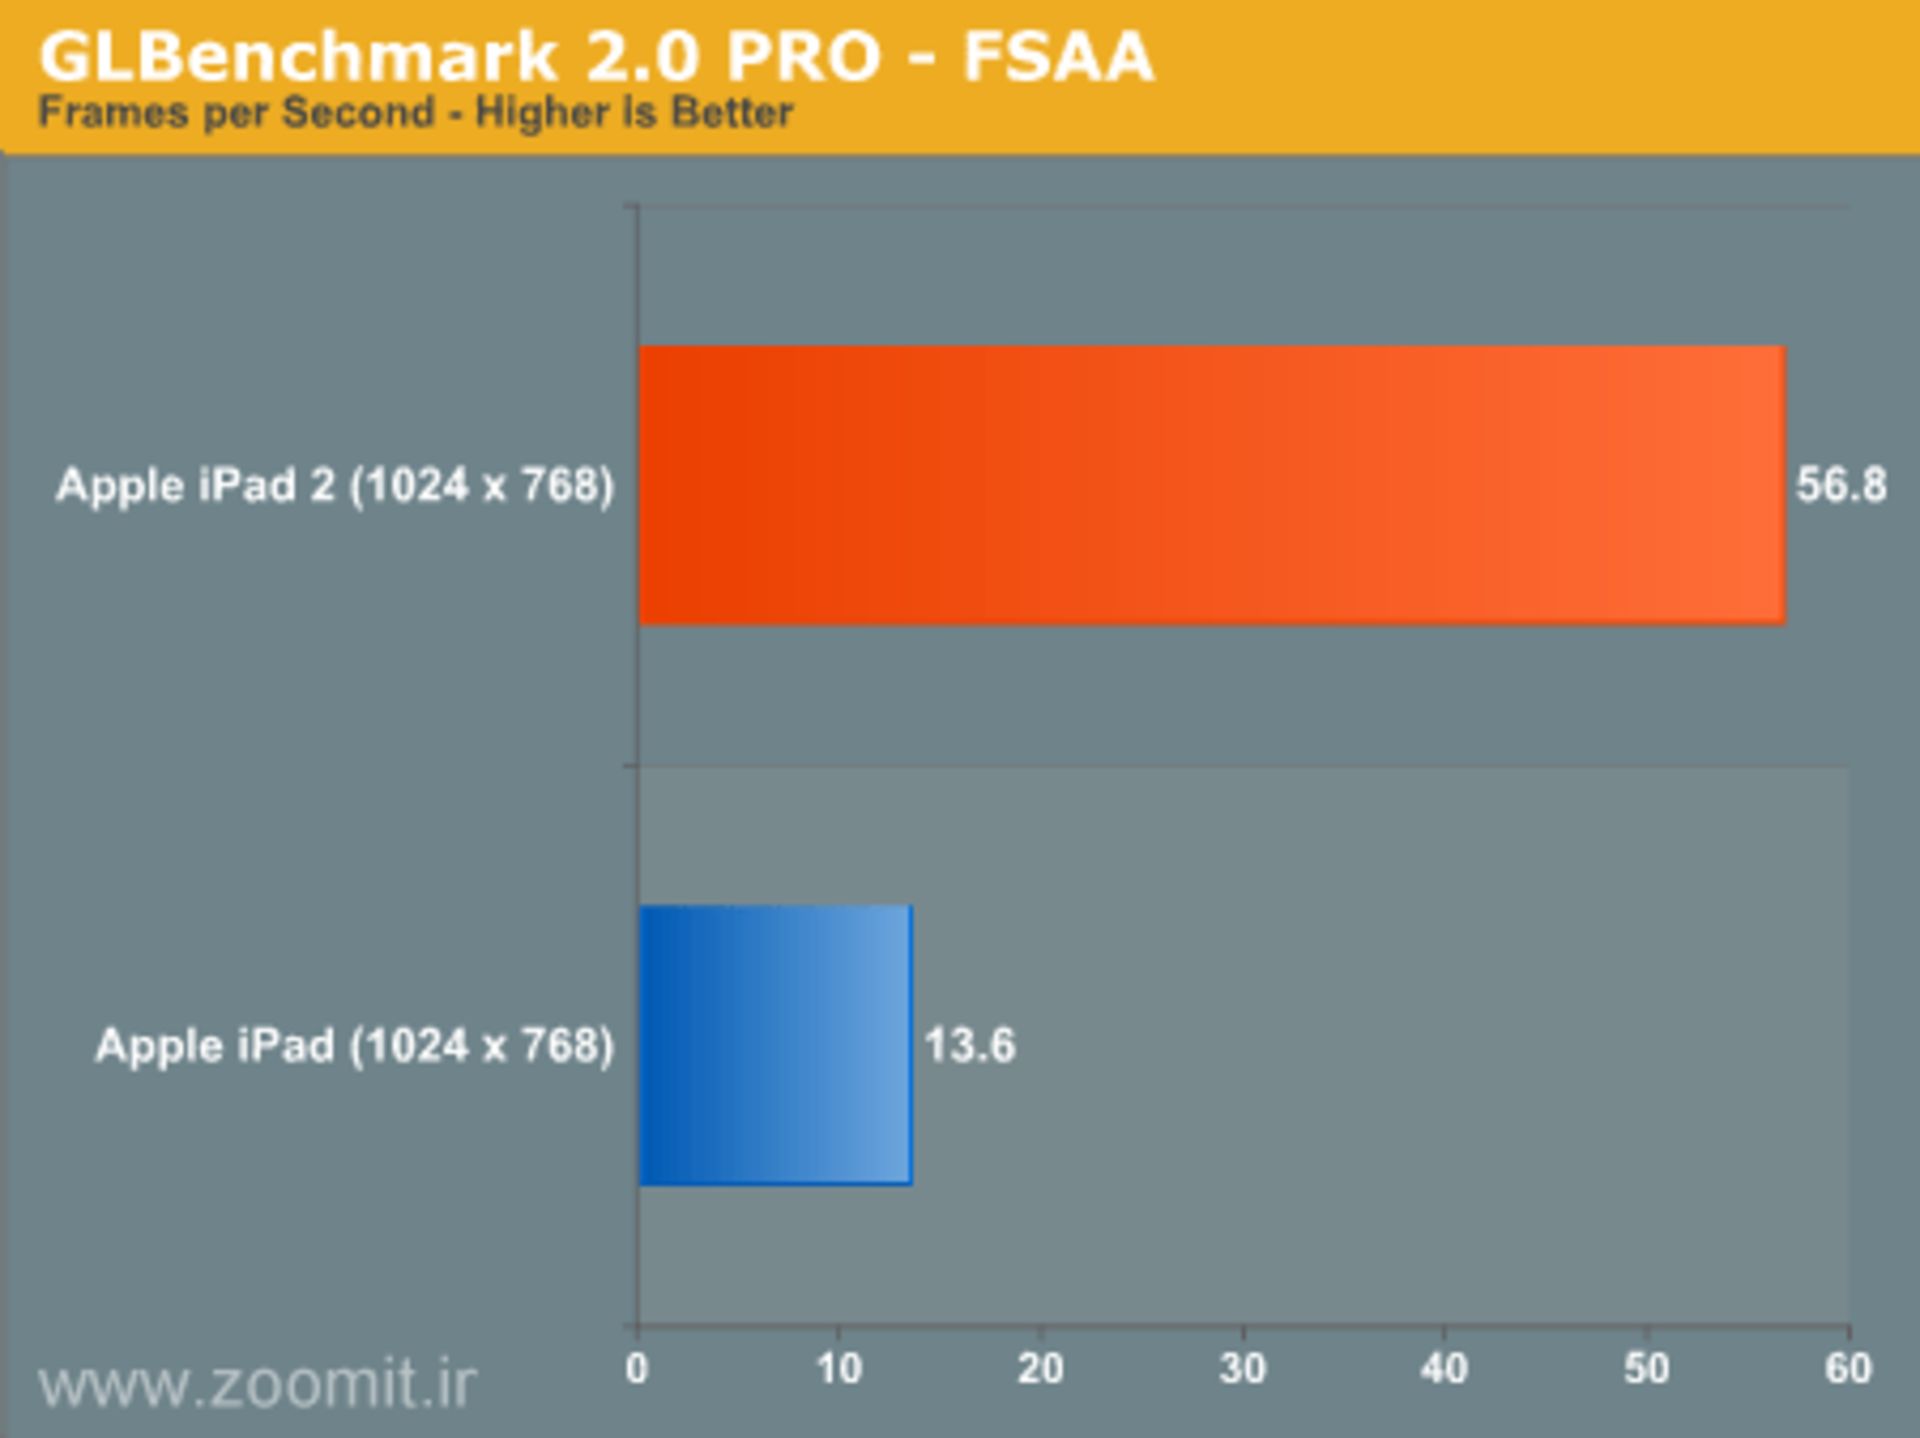 iPad 2 Benchmark Pro with AA